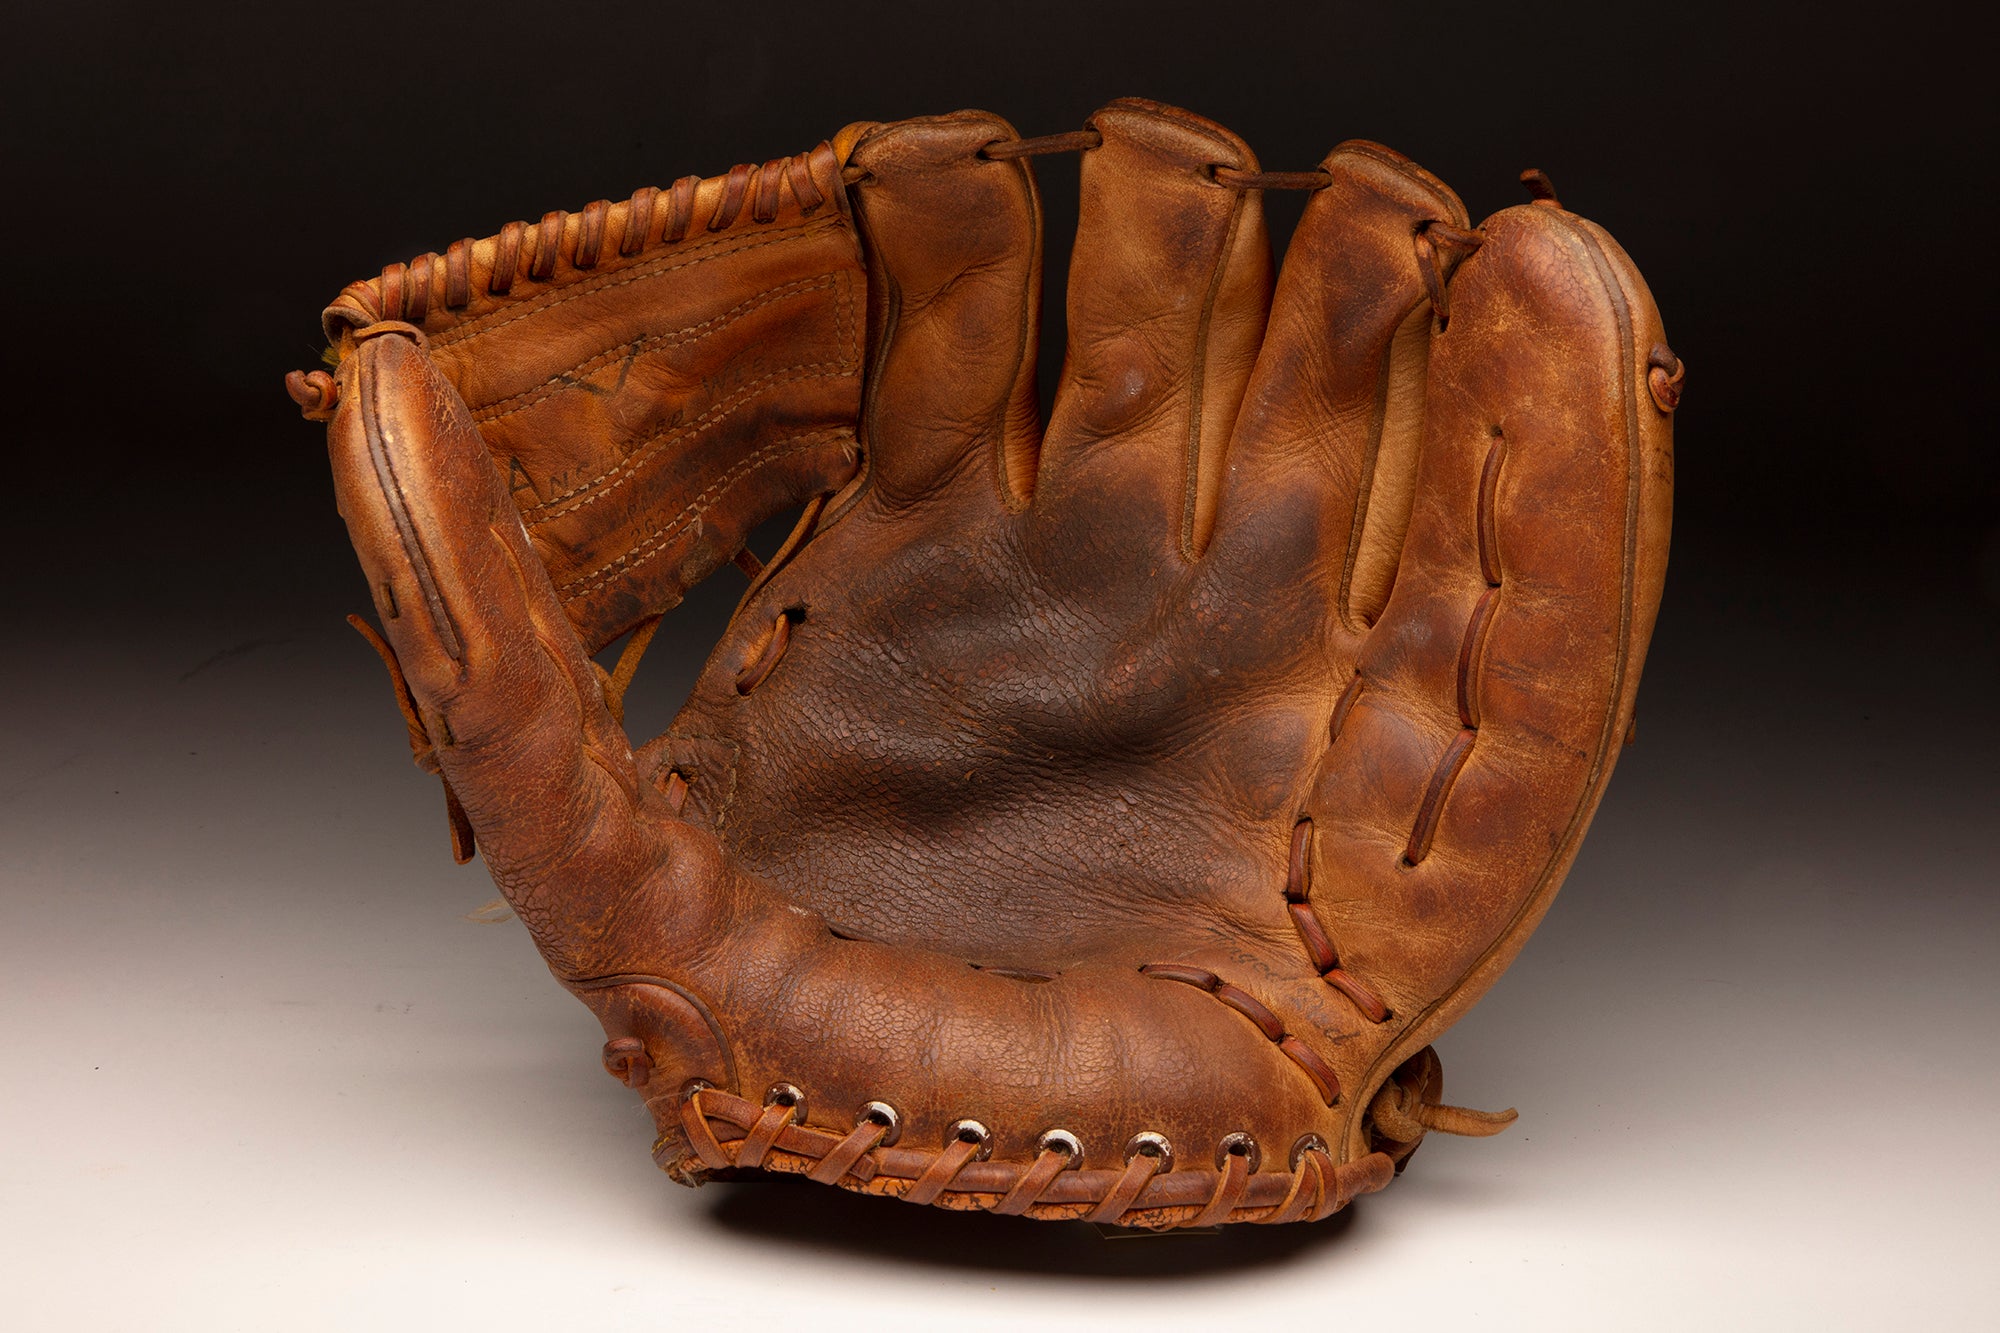 #Shortstops: Rojas’ glove made it to Cooperstown